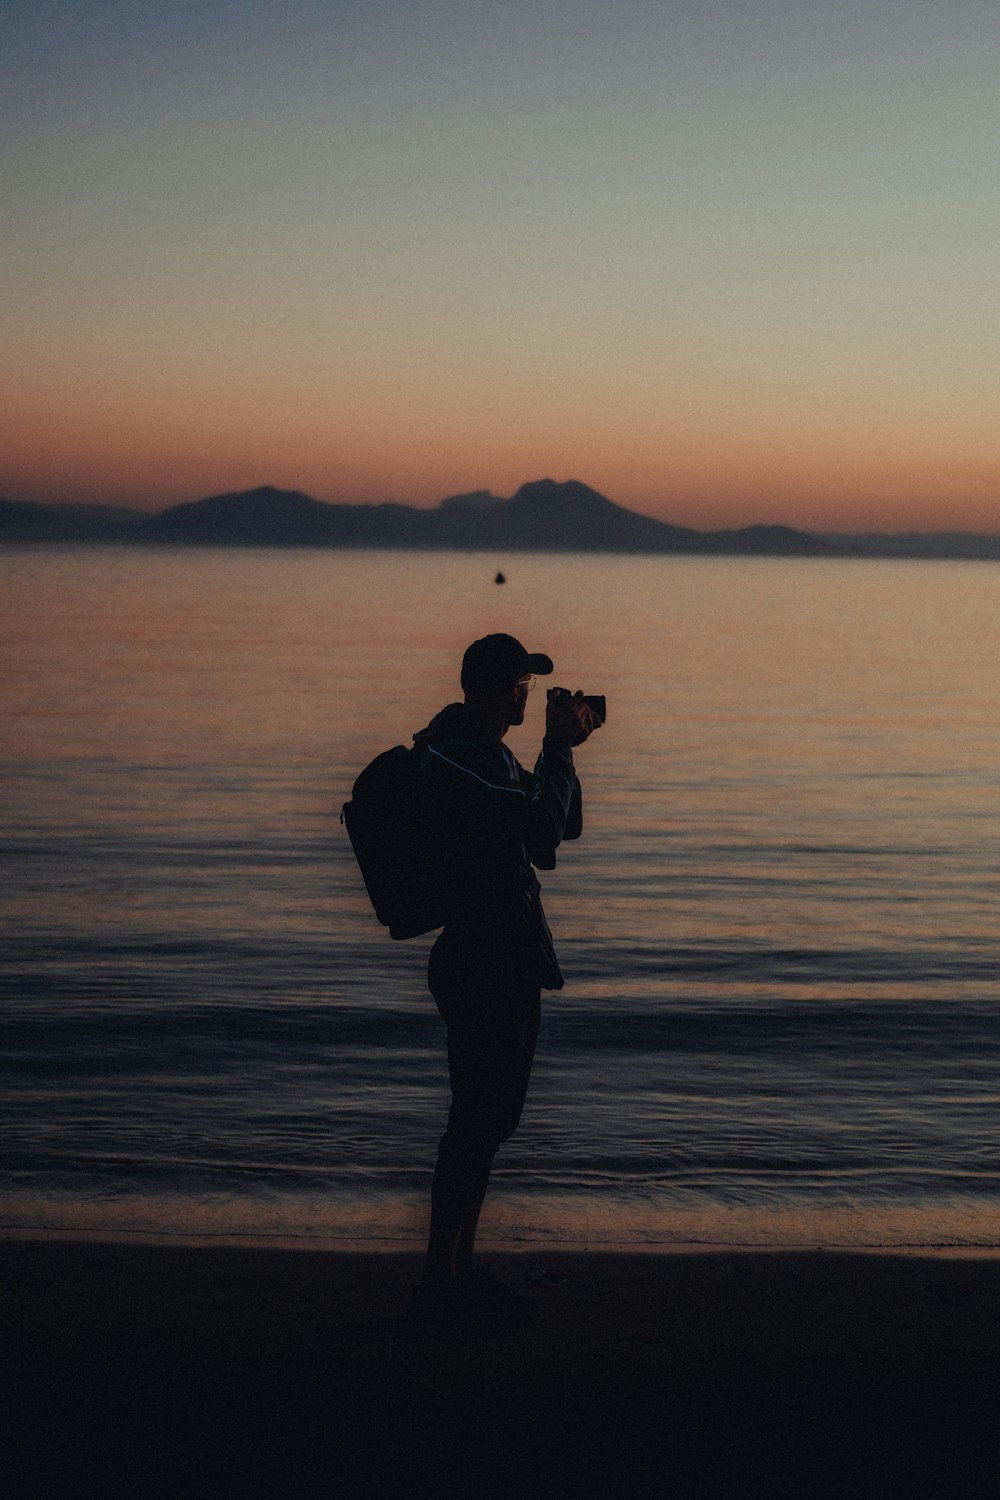 a man standing on a beach holding a camera